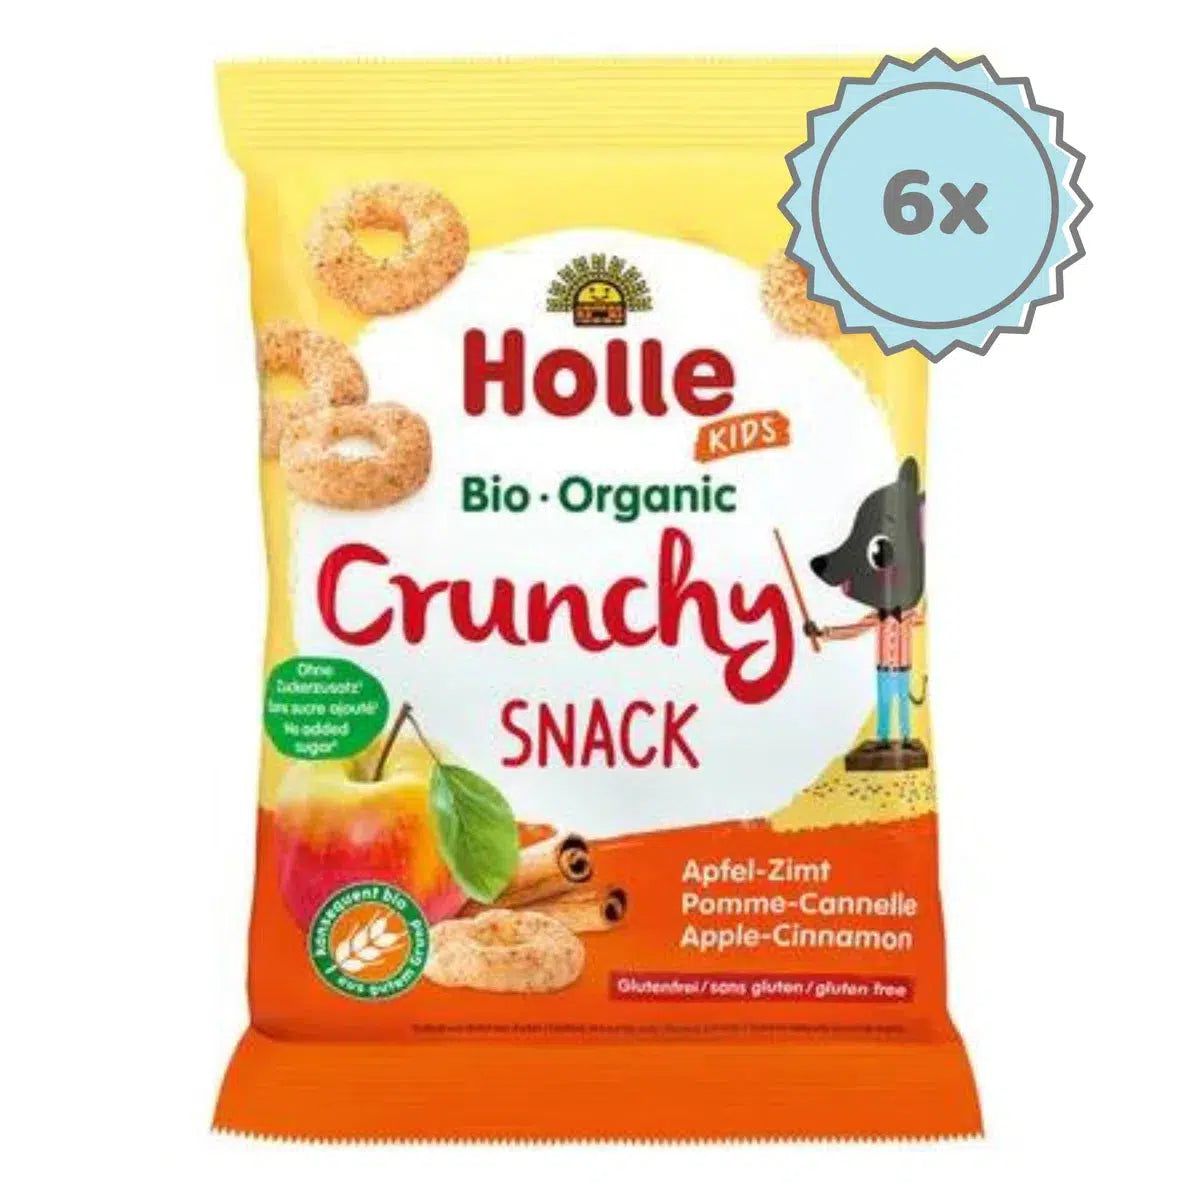 Holle Snack - Organic Apple-Cinnamon Crunchy Baby Puffs (3+ Years), - 6 Packs | Organic's Best Shop